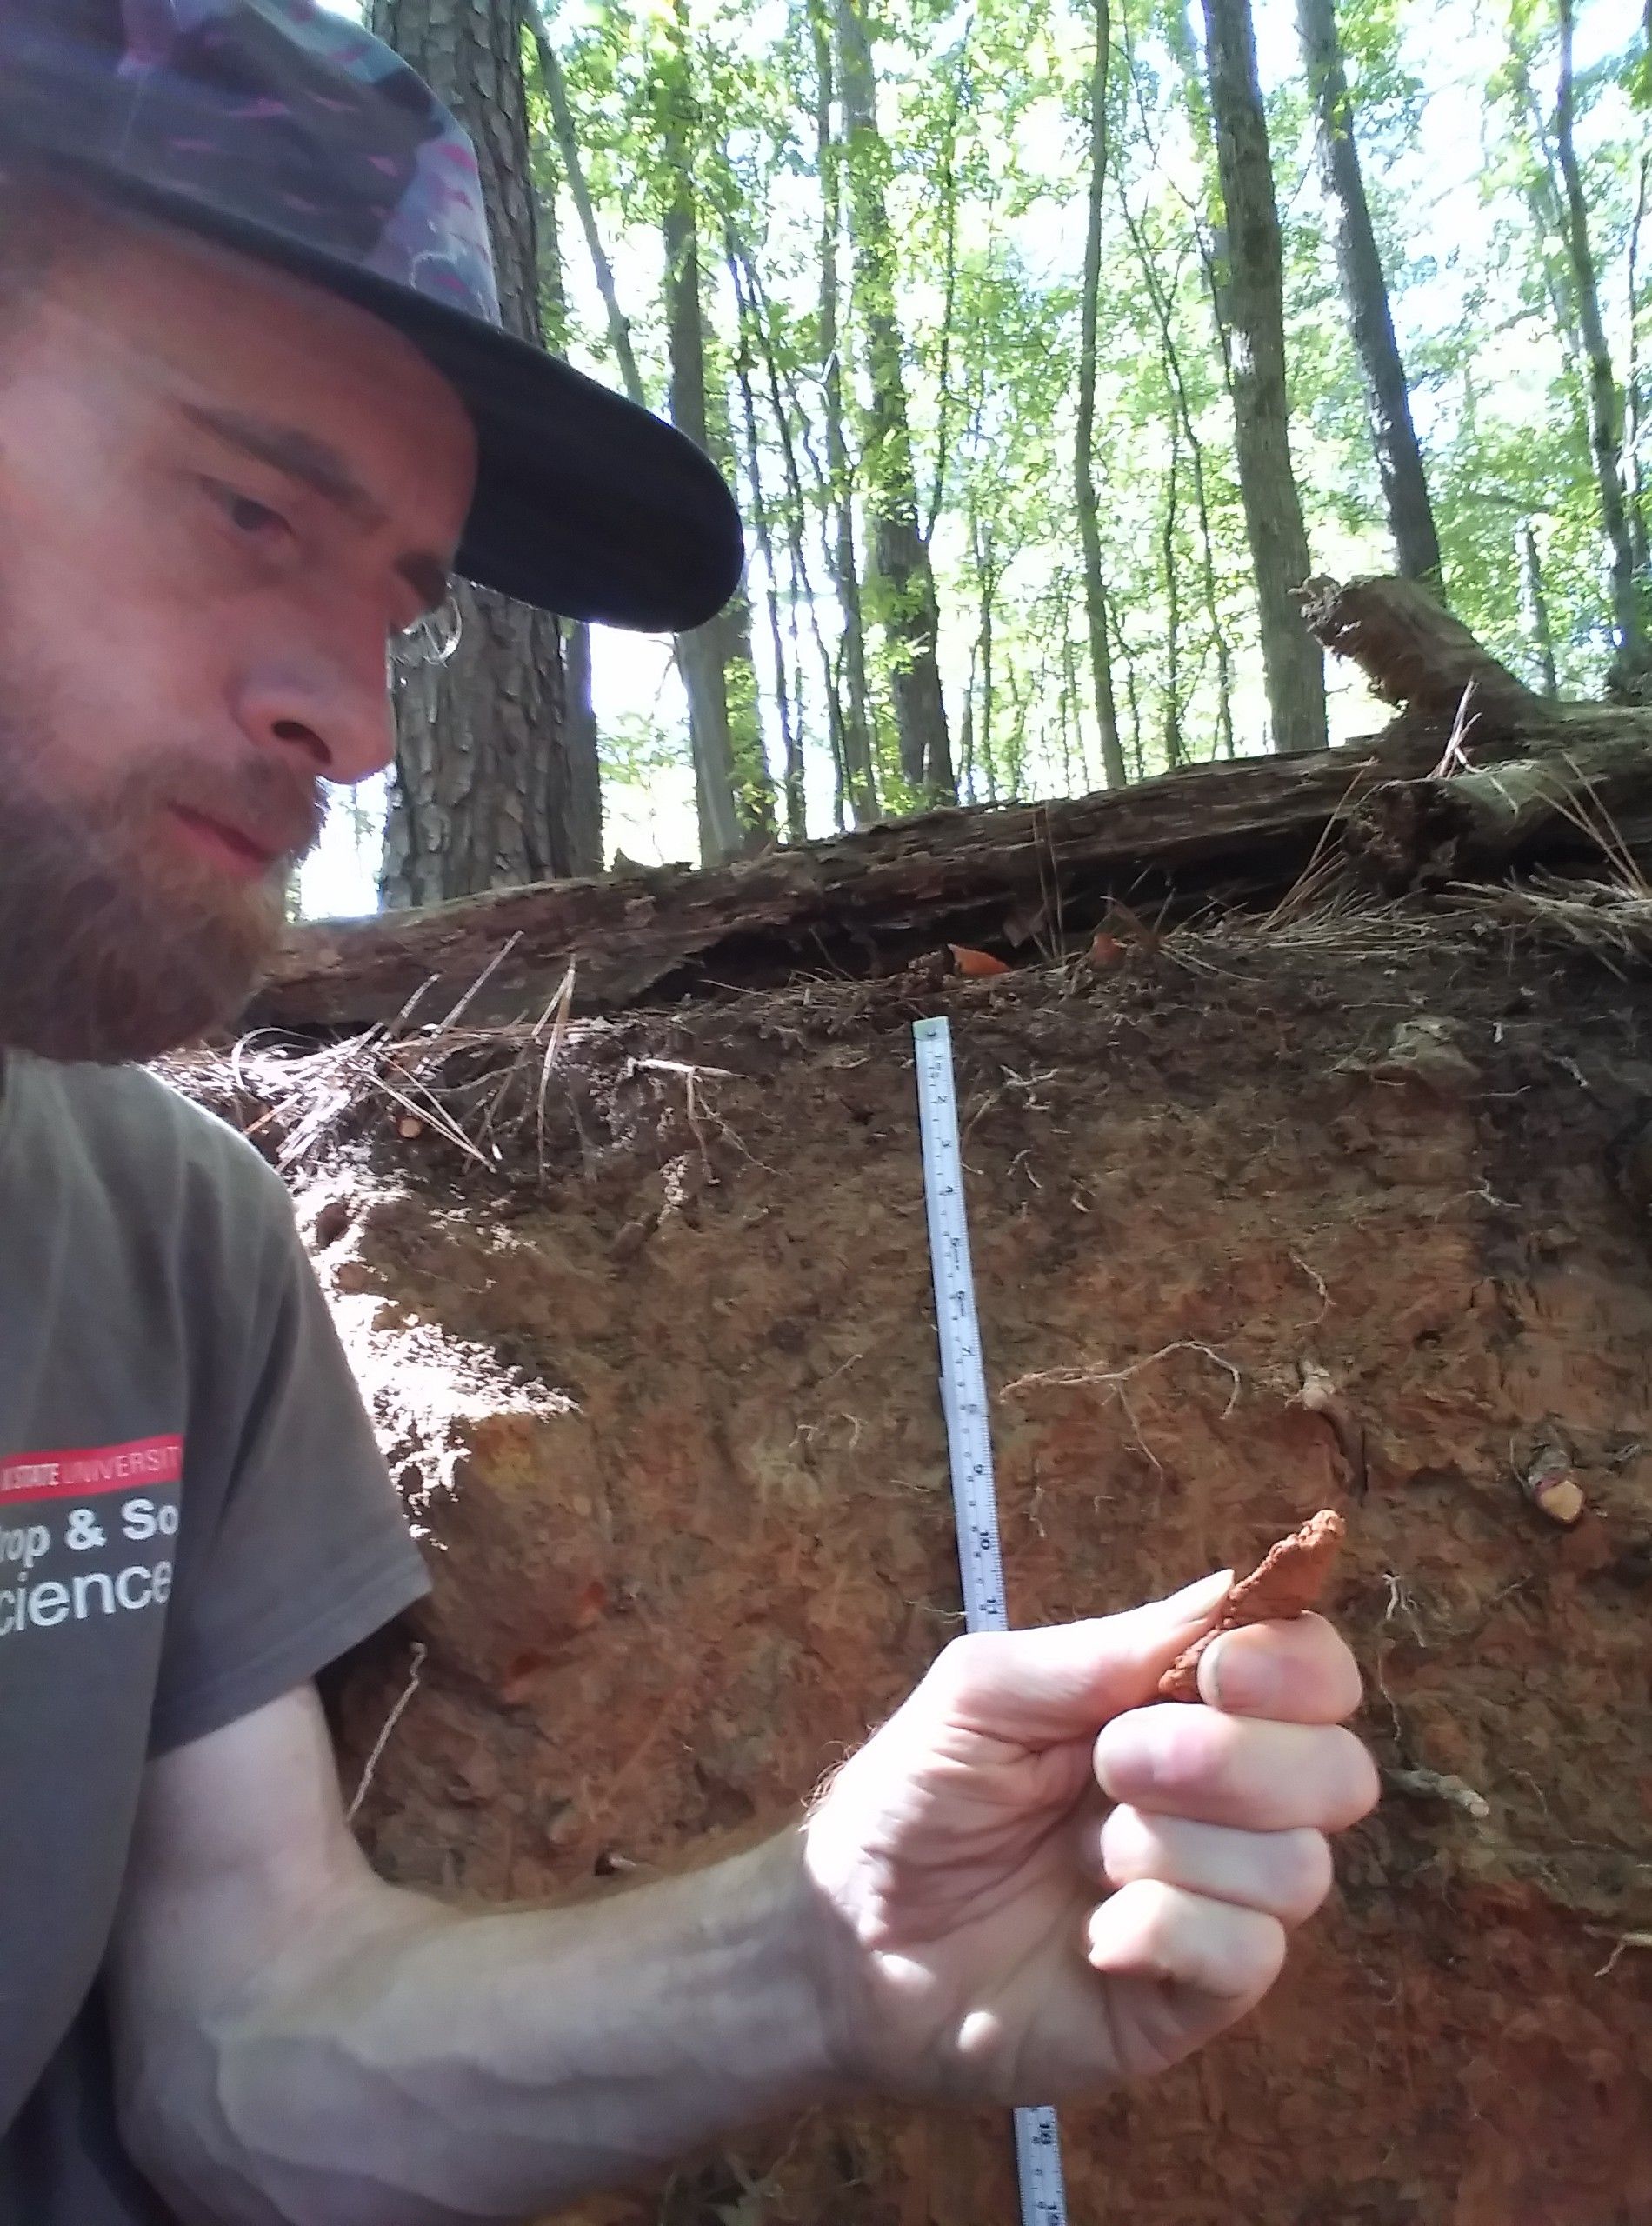 Student handles soil sample outdoors